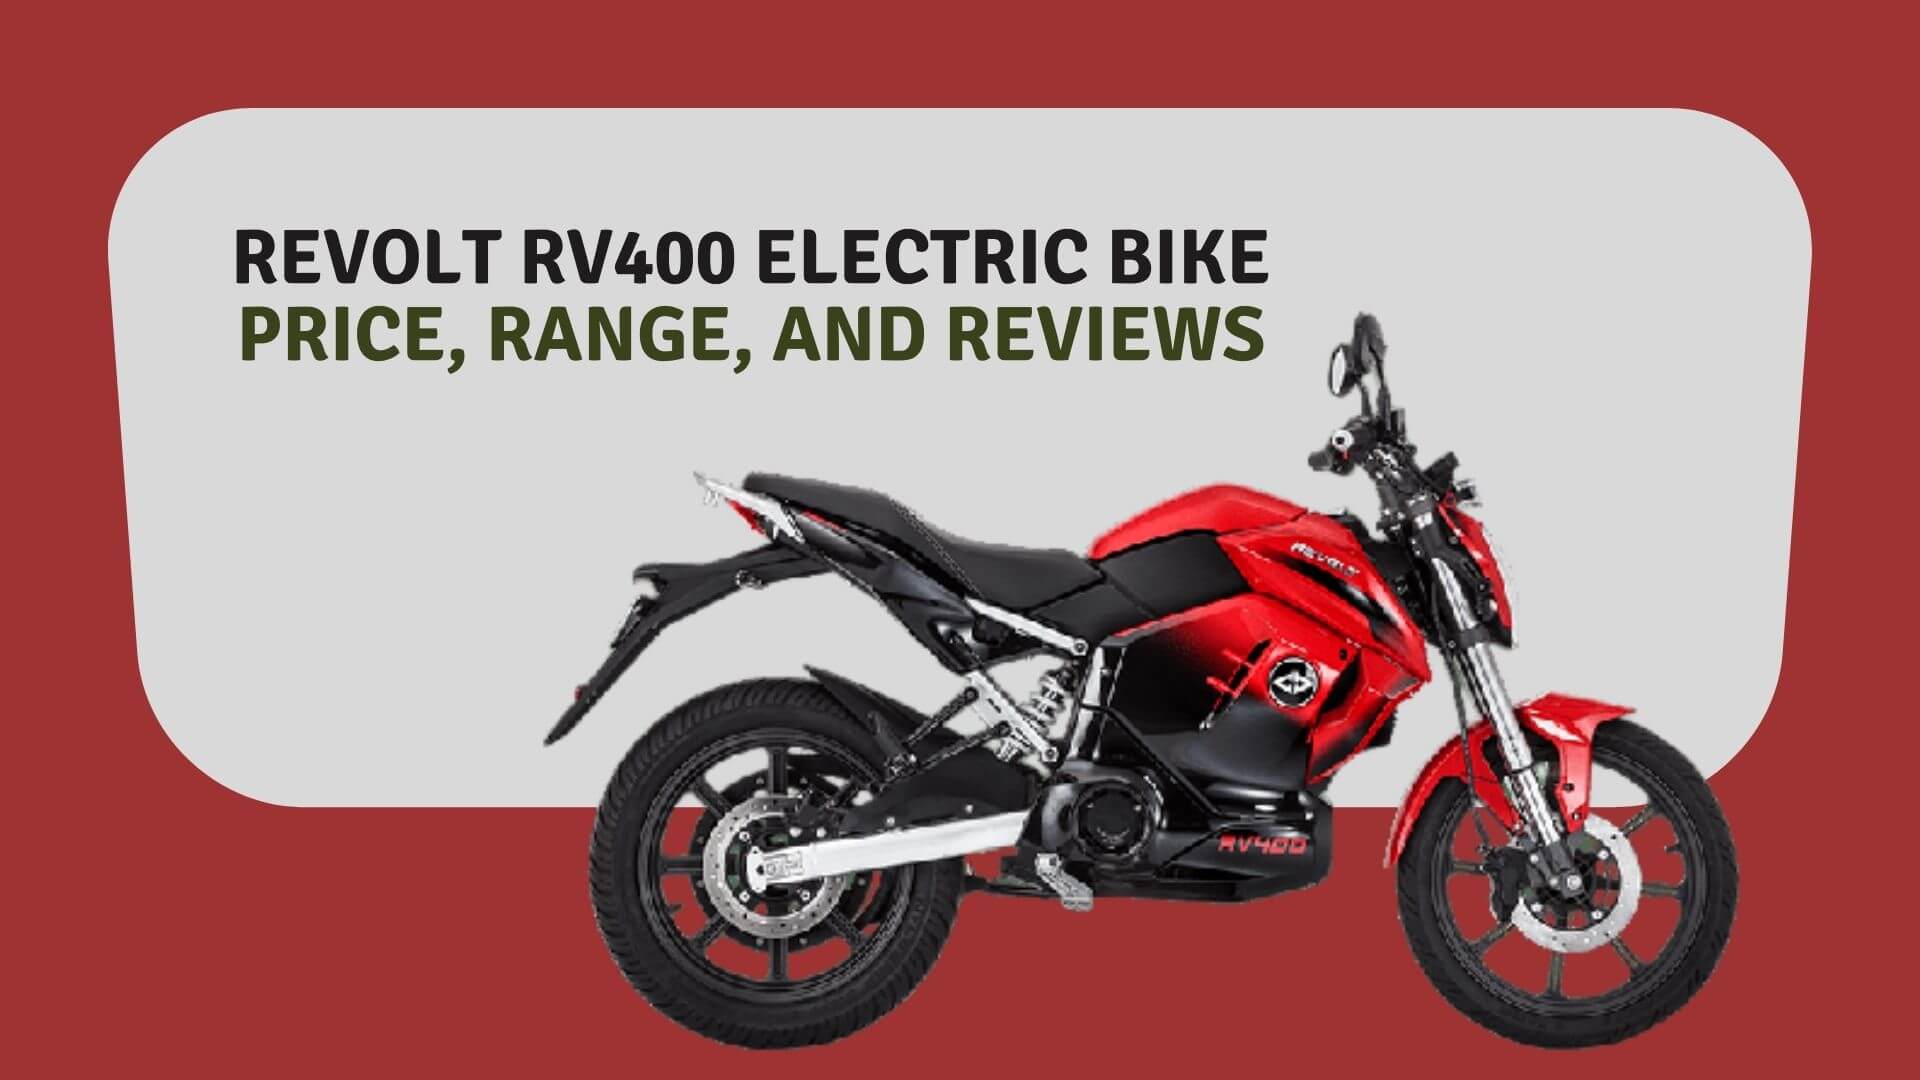 https://e-vehicleinfo.com/revolt-rv400-electric-bike-price-range-and-reviews/